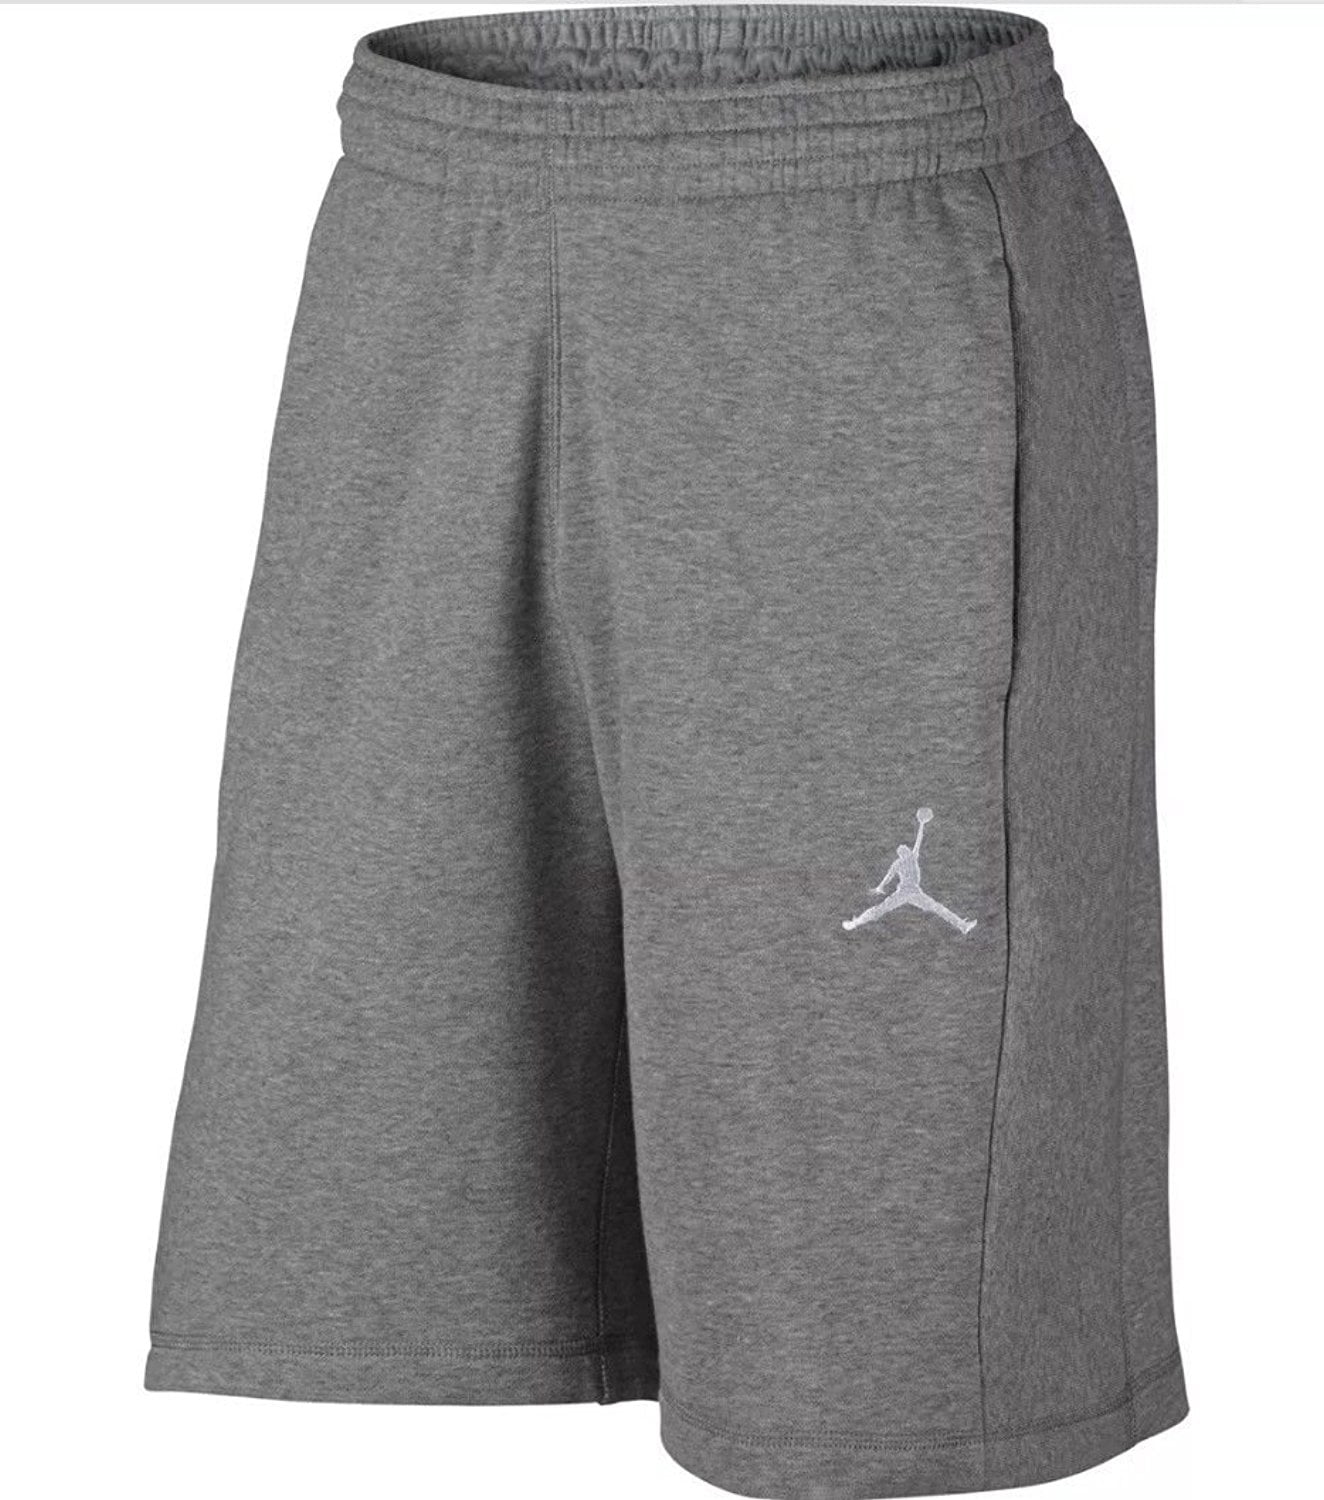 grey jordan sweat shorts online -